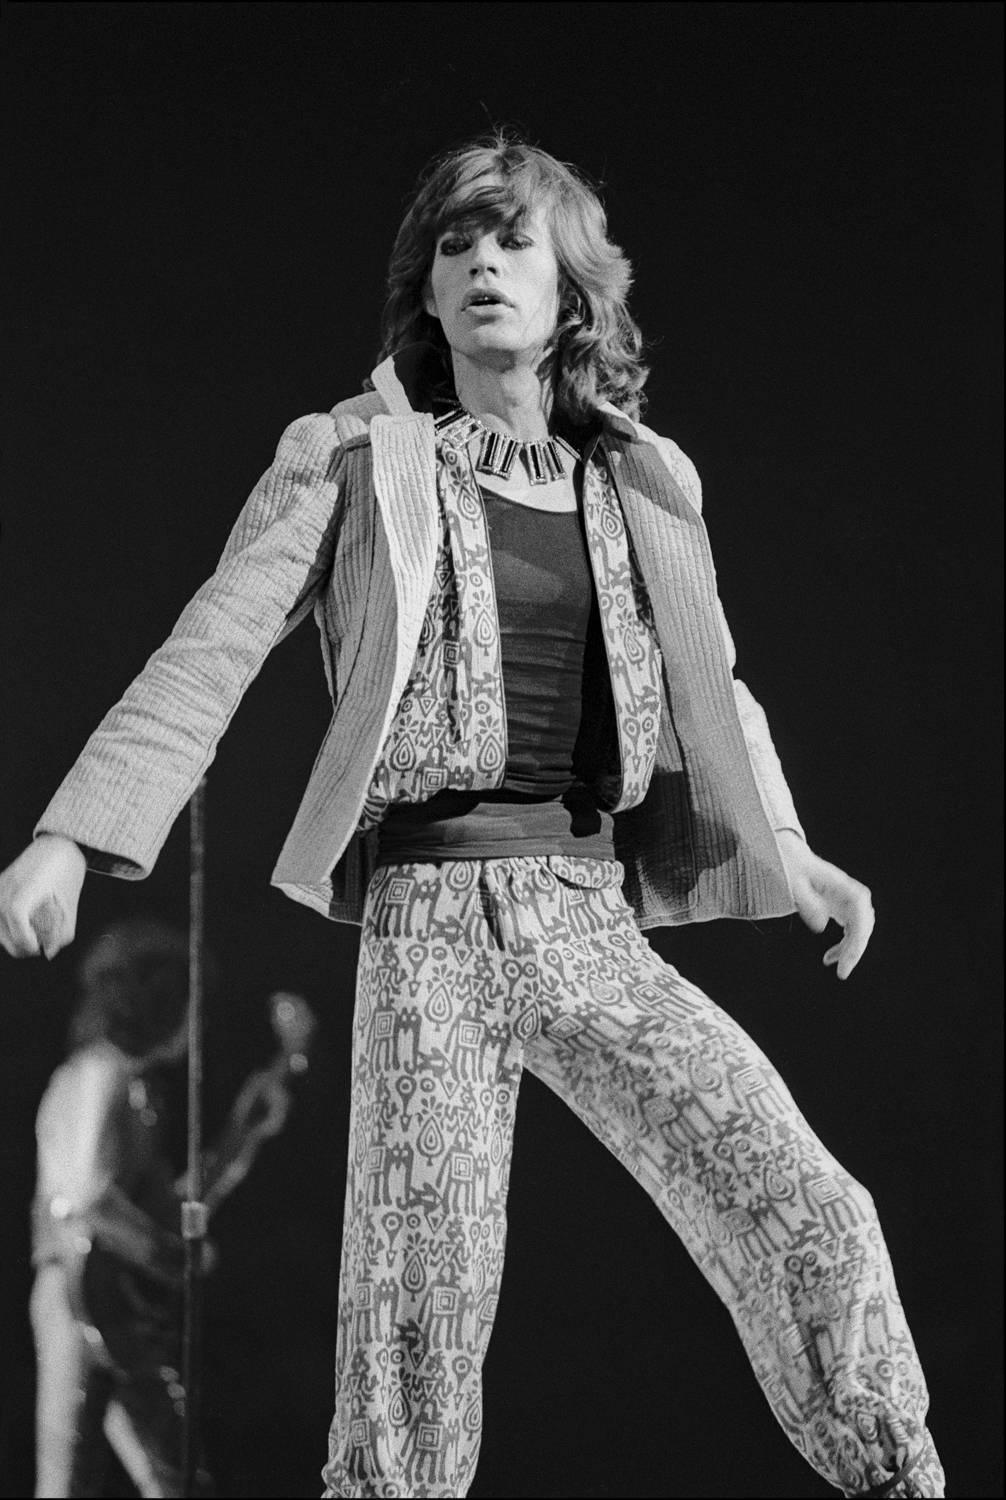 Mick Jagger Performs